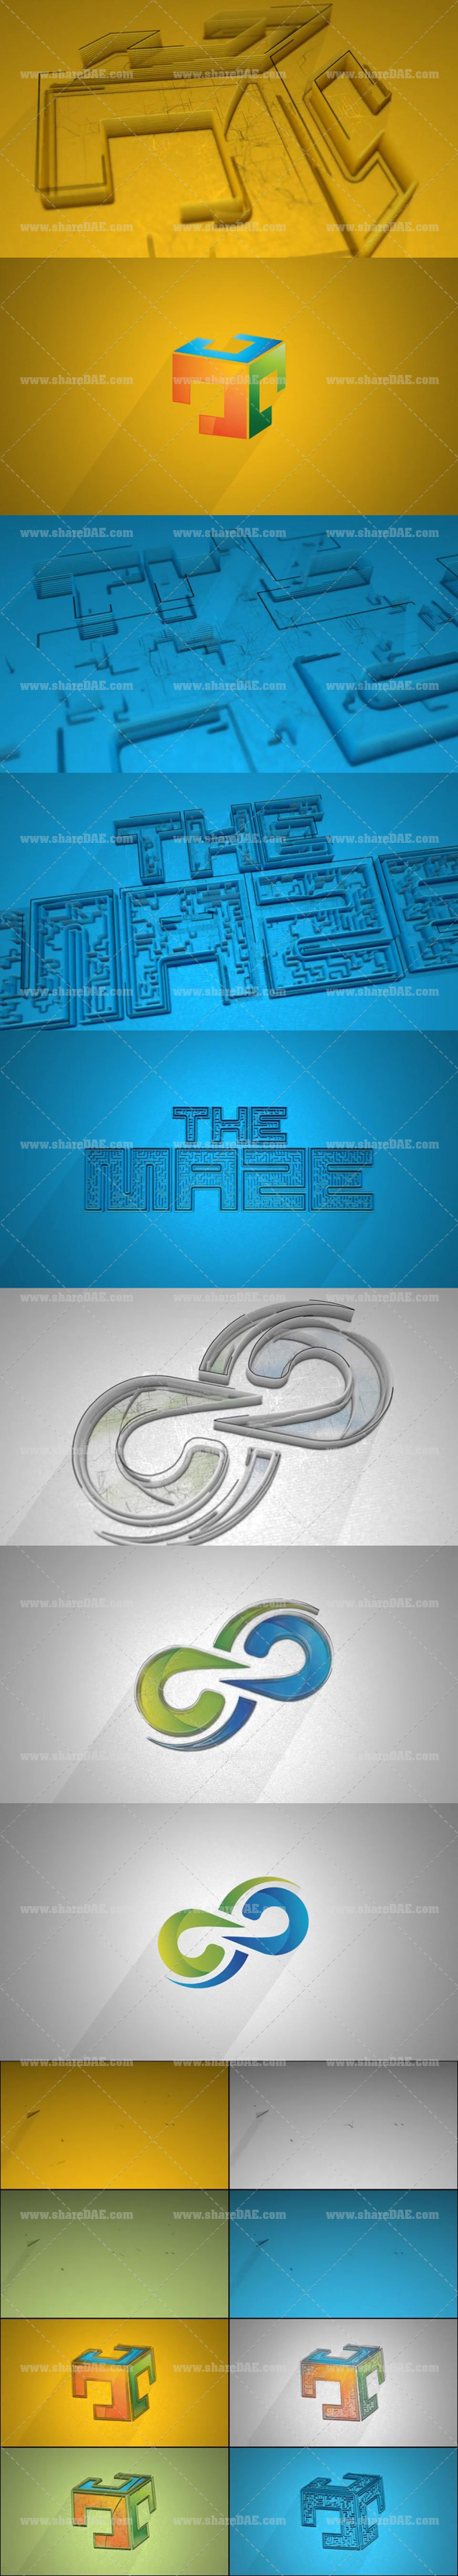 Videohive - Contour / Maze Logo 20045858 - Free Download 